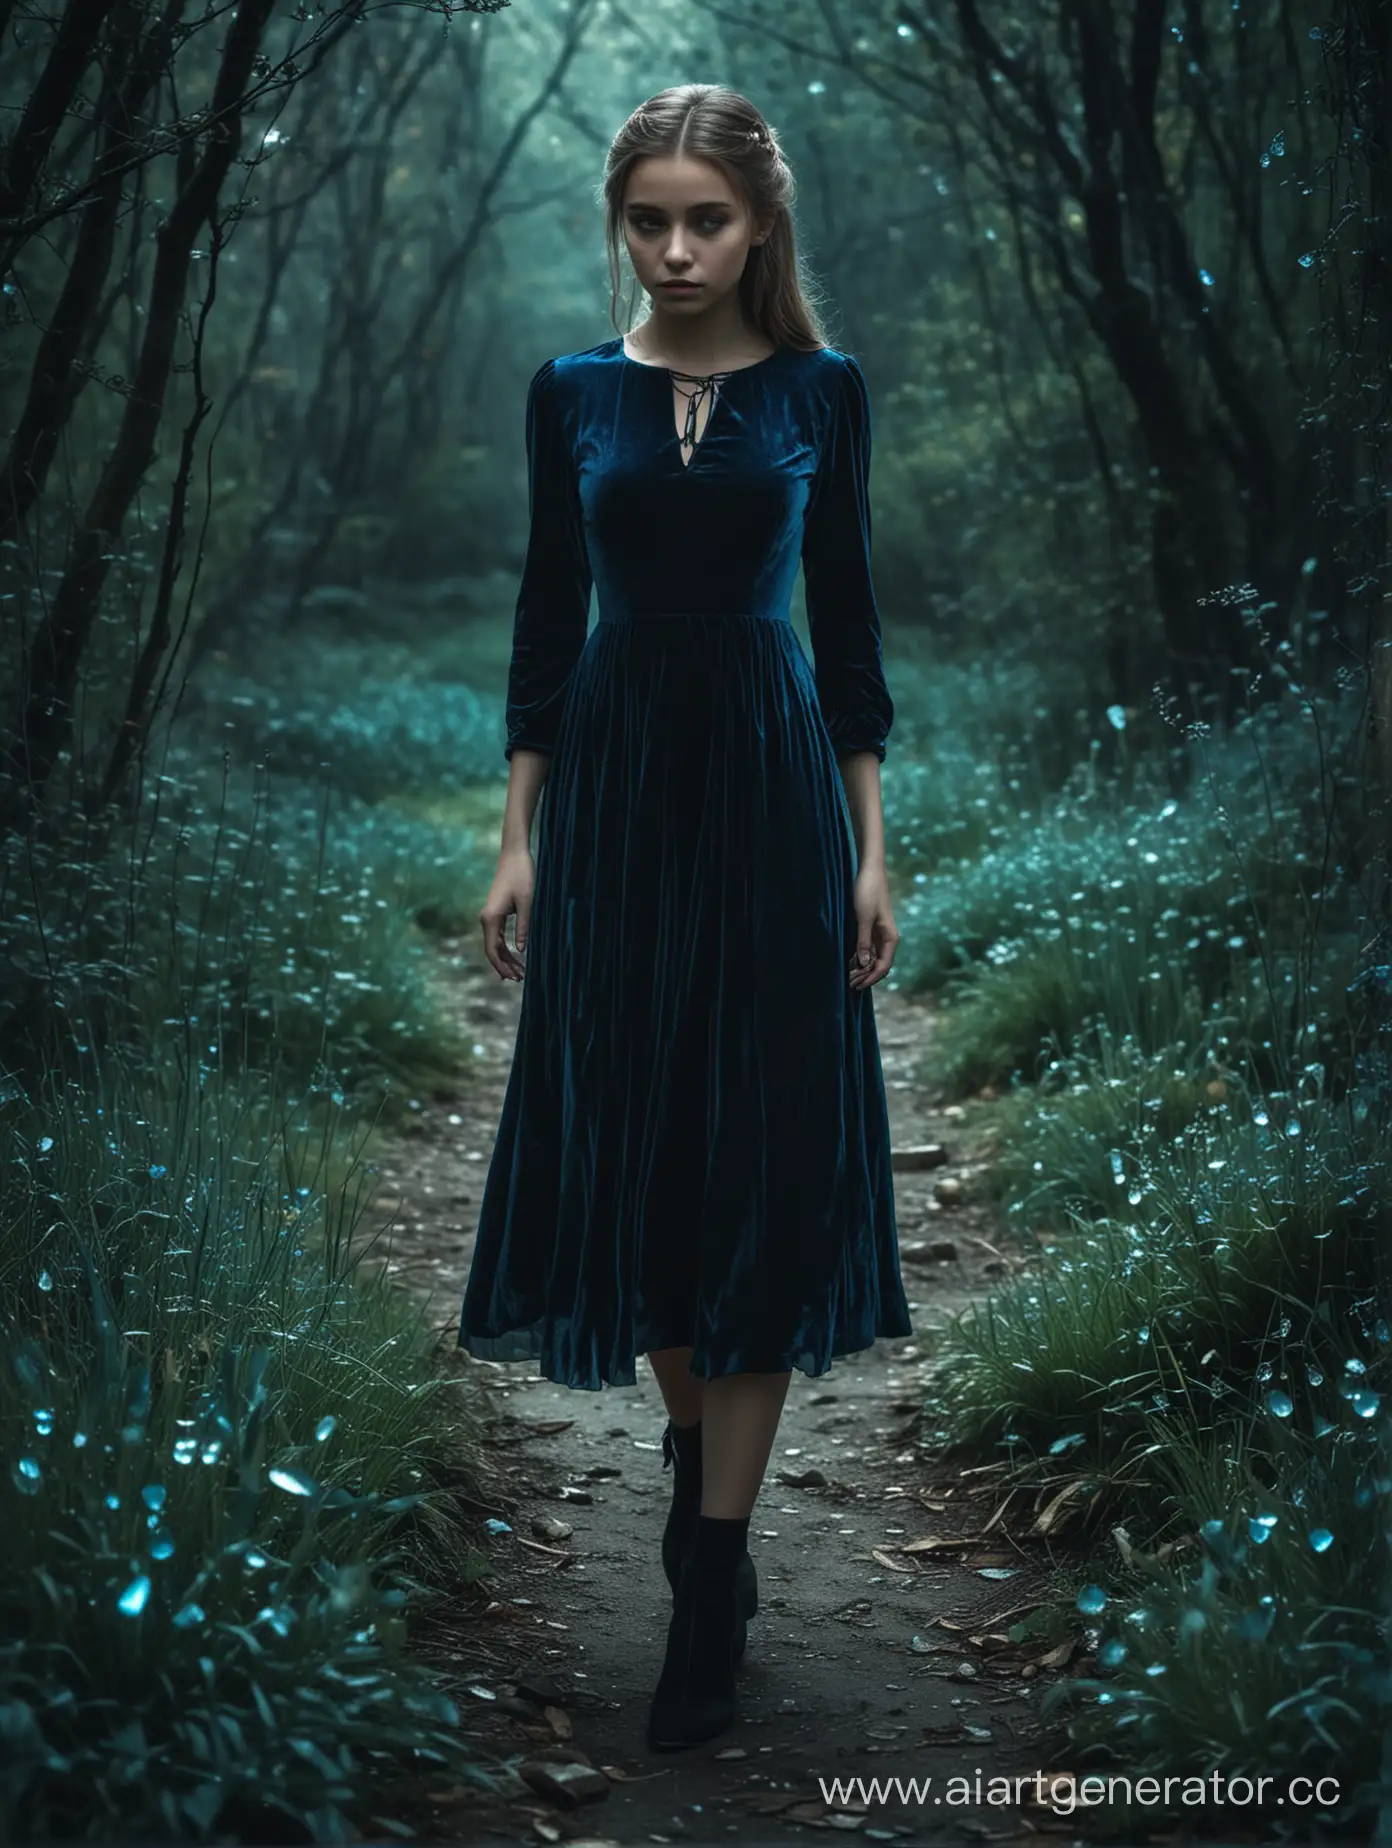 Mystical-Girl-in-Dark-Blue-Velvet-Dress-with-Crystals